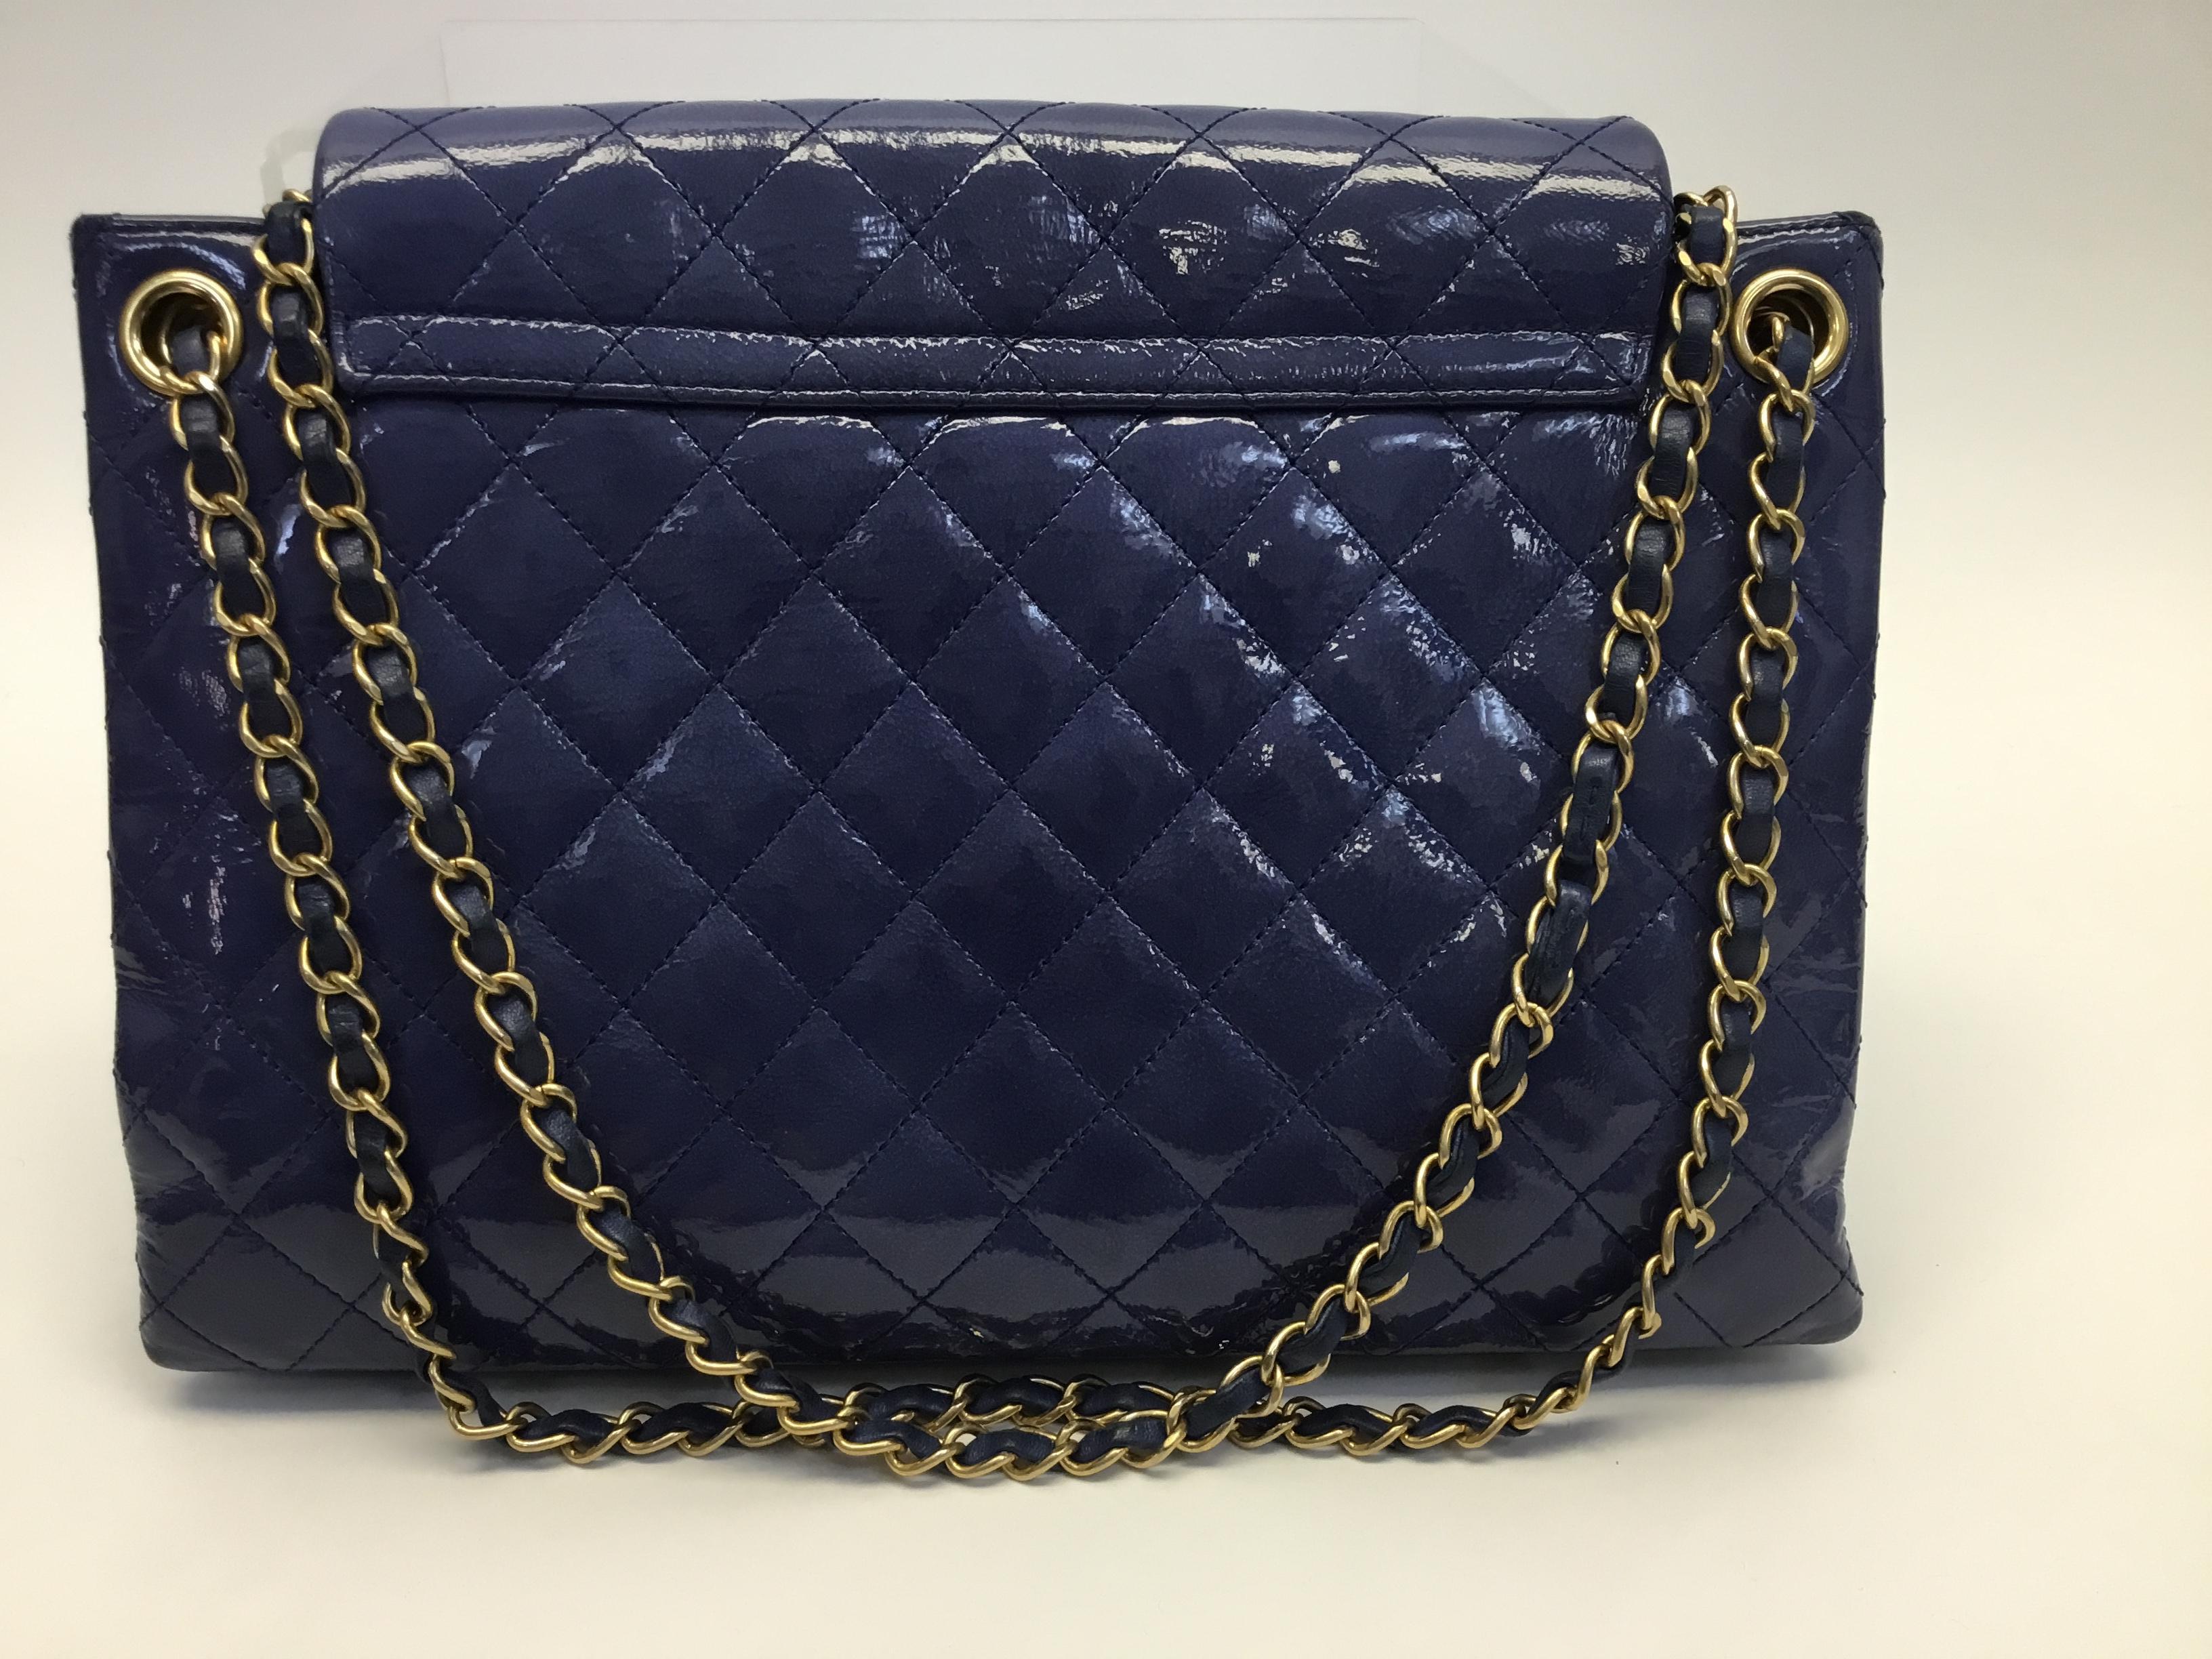 Black Chanel Purple Patent Leather Quilted Shoulder Bag For Sale